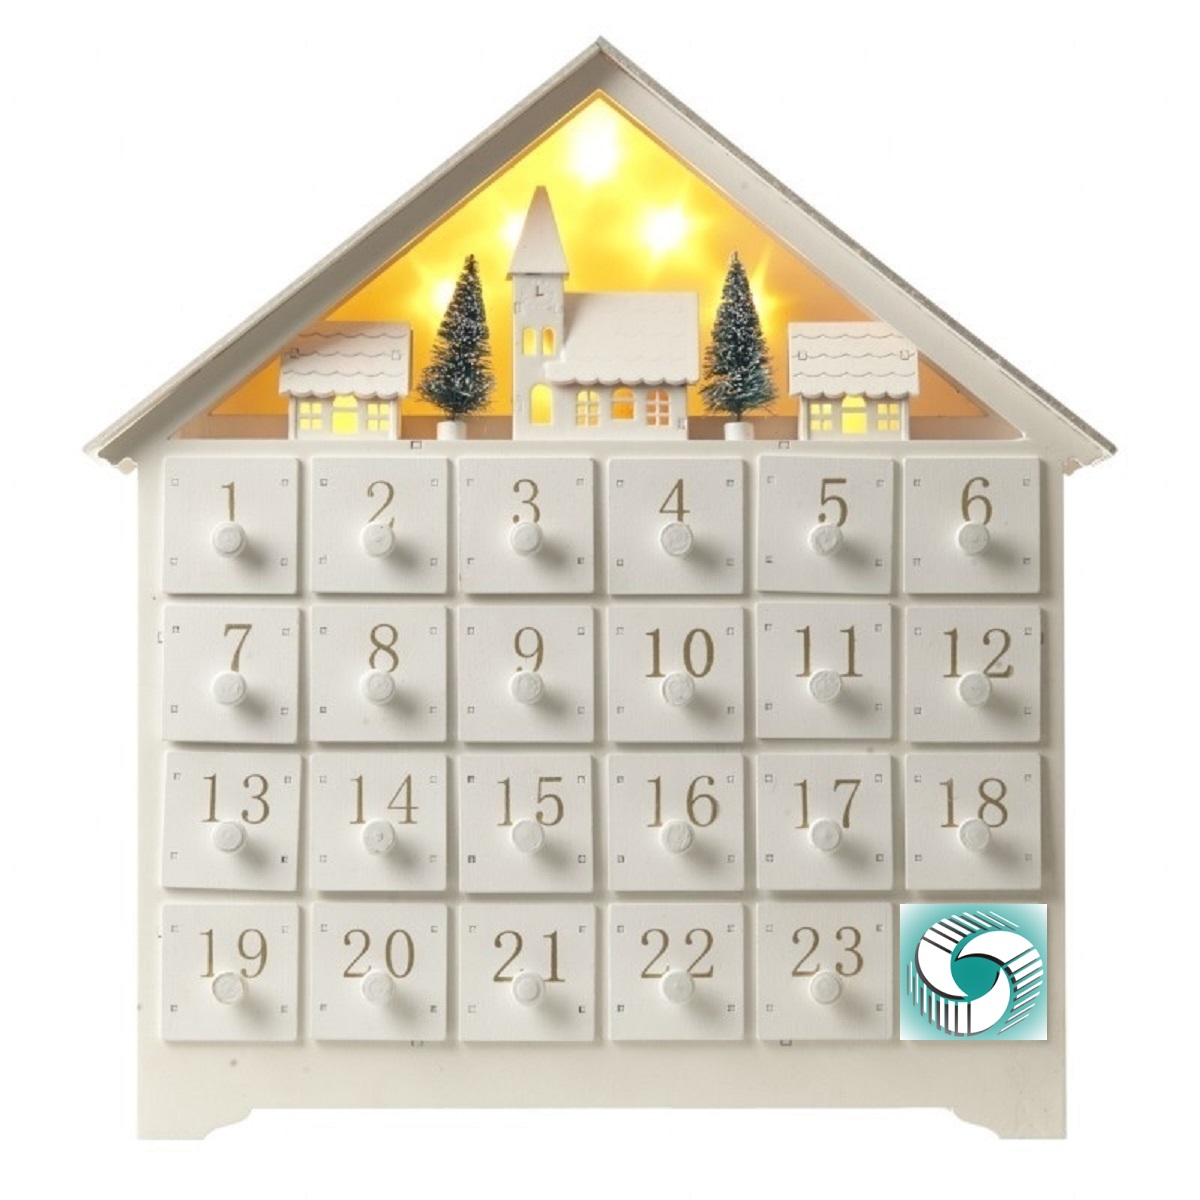 Day 24 – Frontier’s Advent Calendar